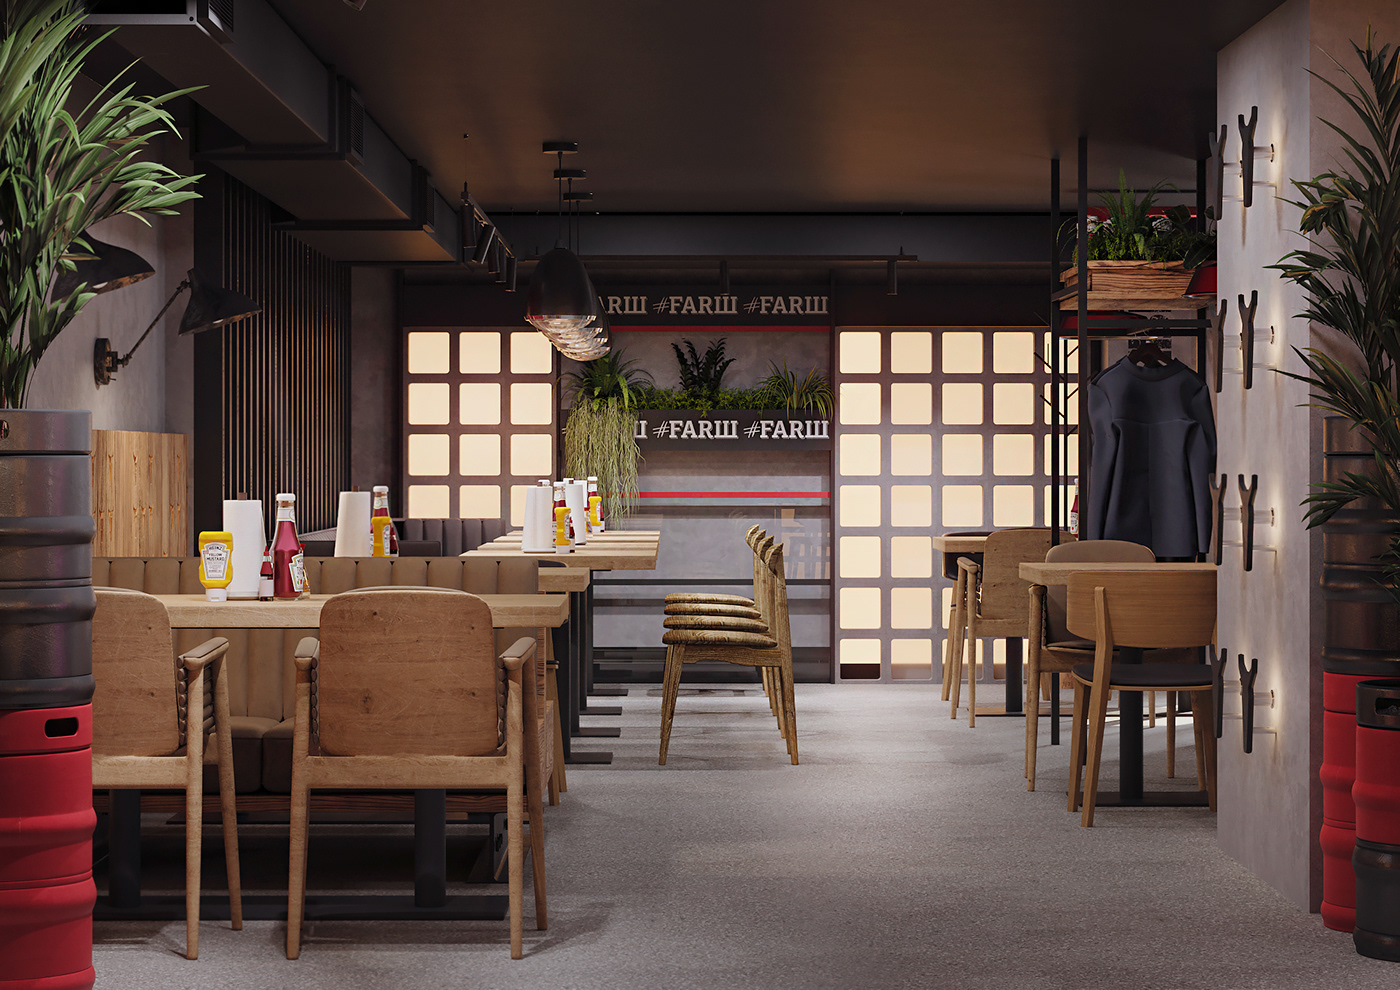 interior design  Fast food burger restaurant asia toilet Street Food LOFT Noodle Shop бар